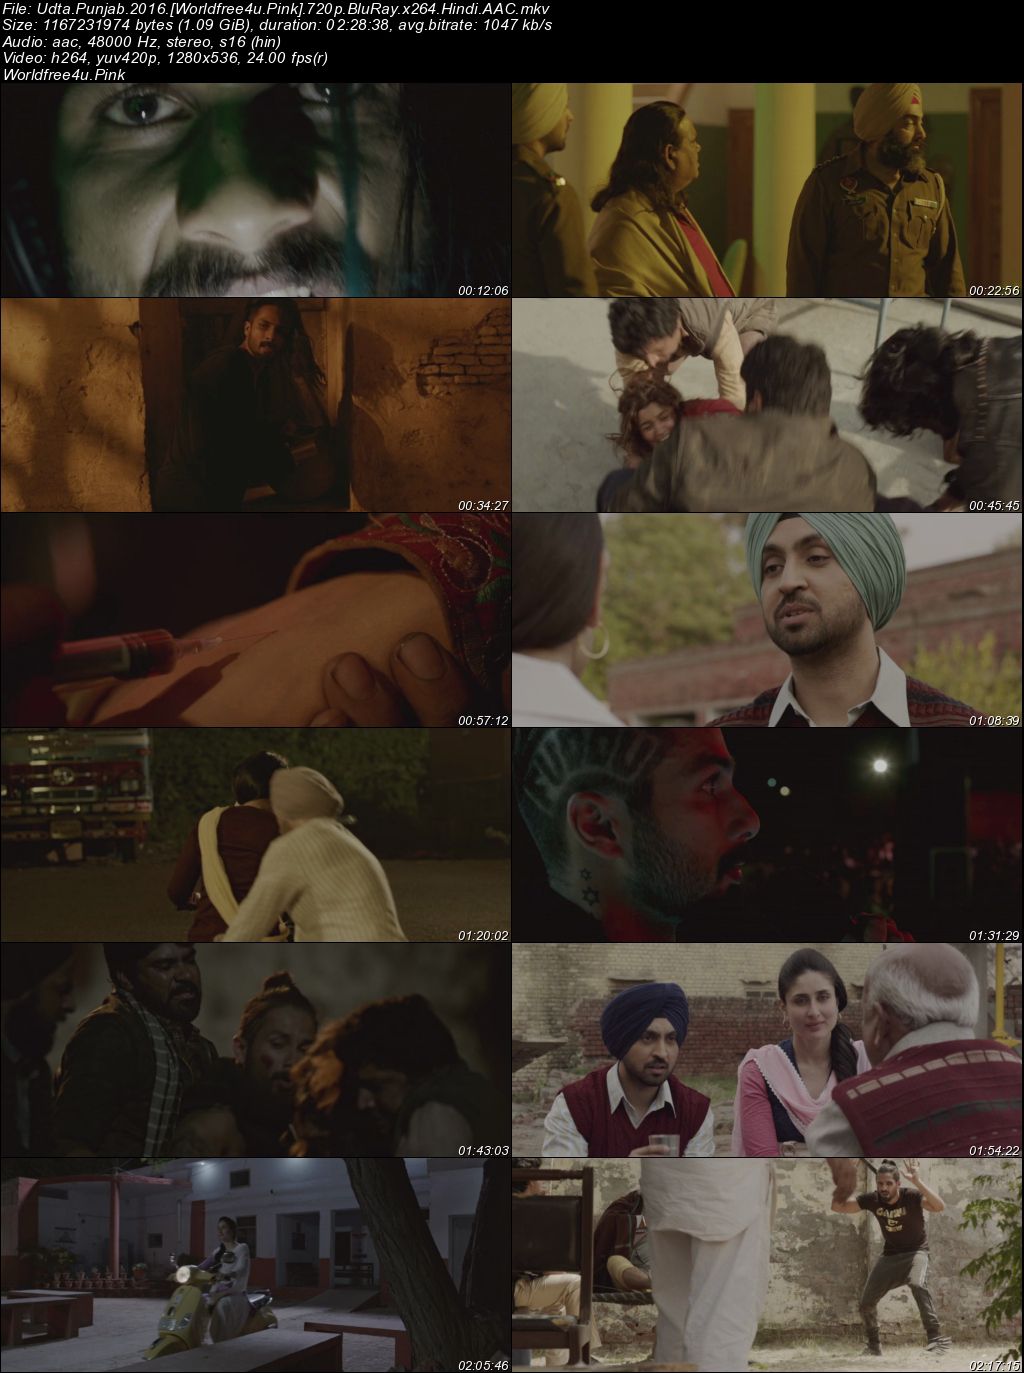 Udta Punjab 2016 Hindi Movie Download || BluRay 720p